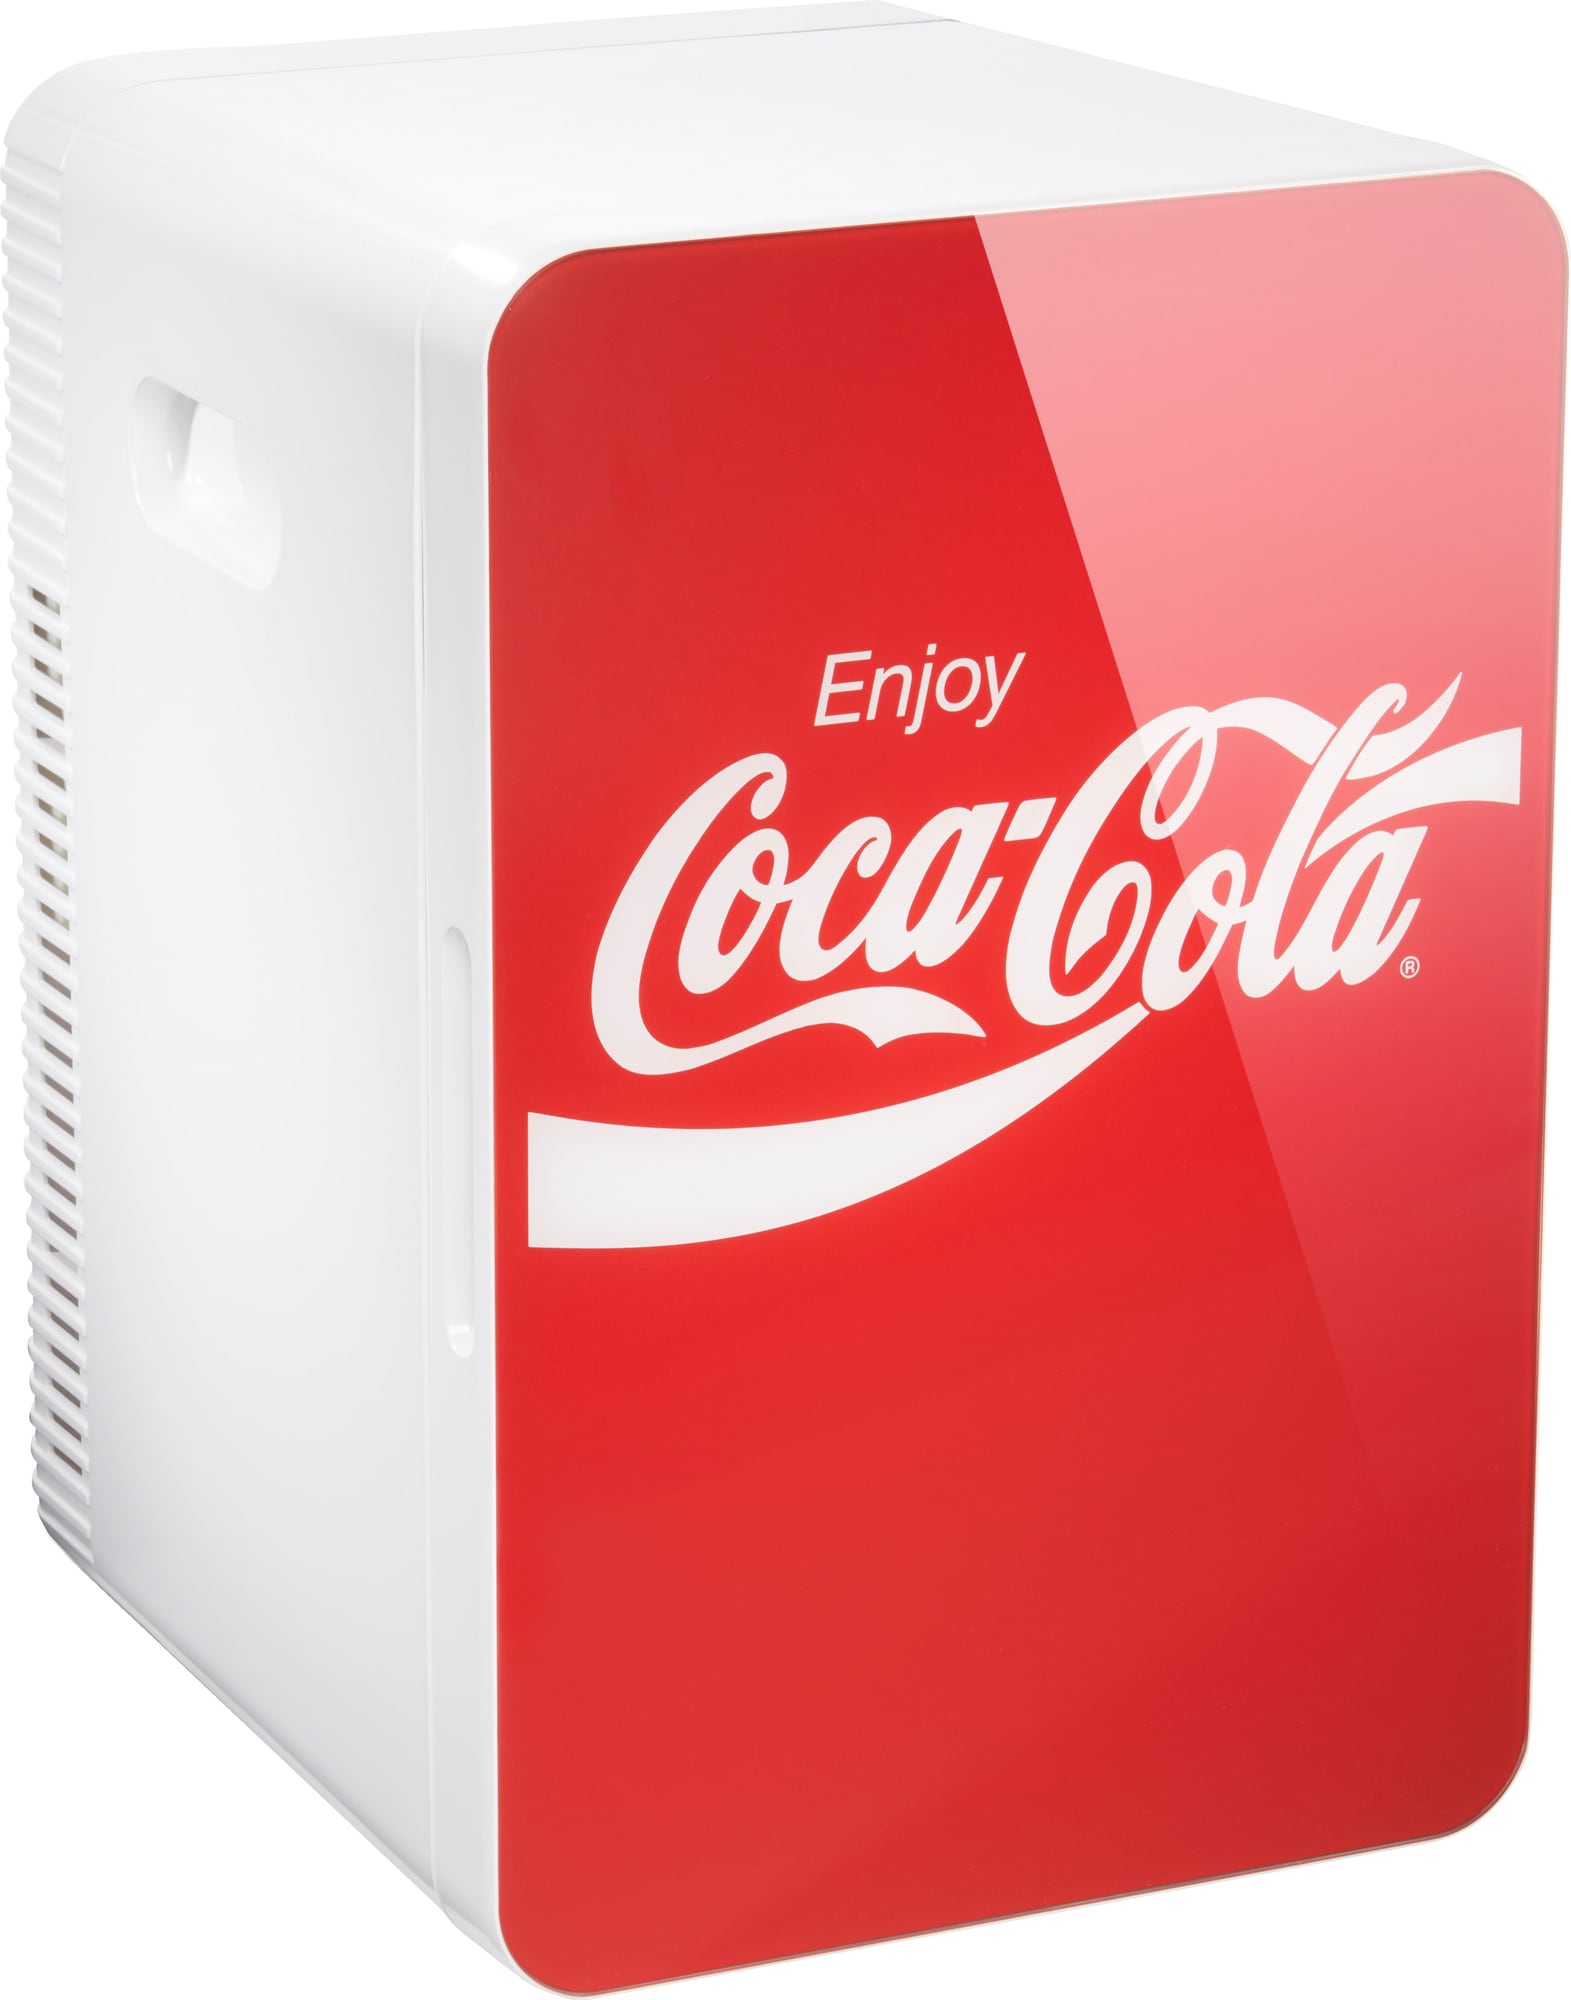 Mobicool Coca Cola minikjøleskap MBF20 - Elkjøp